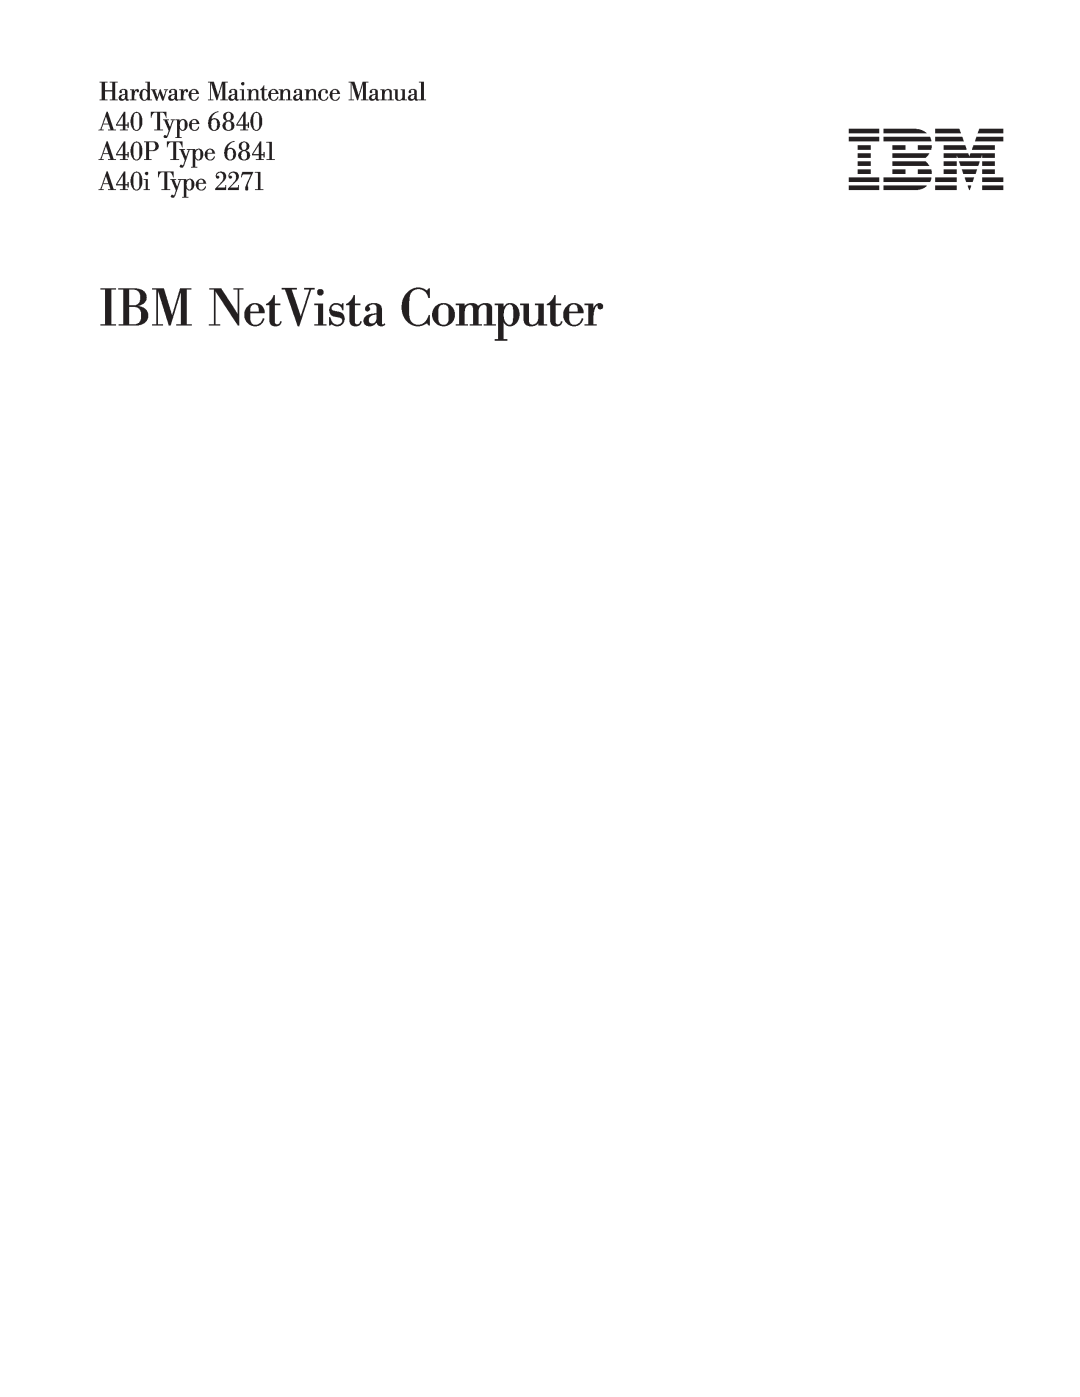 IBM A40I TYPE 2271, A40P TYPE 6841 manual IBM NetVista Computer, Hardware Maintenance Manual A40 Type A40P Type A40i Type 